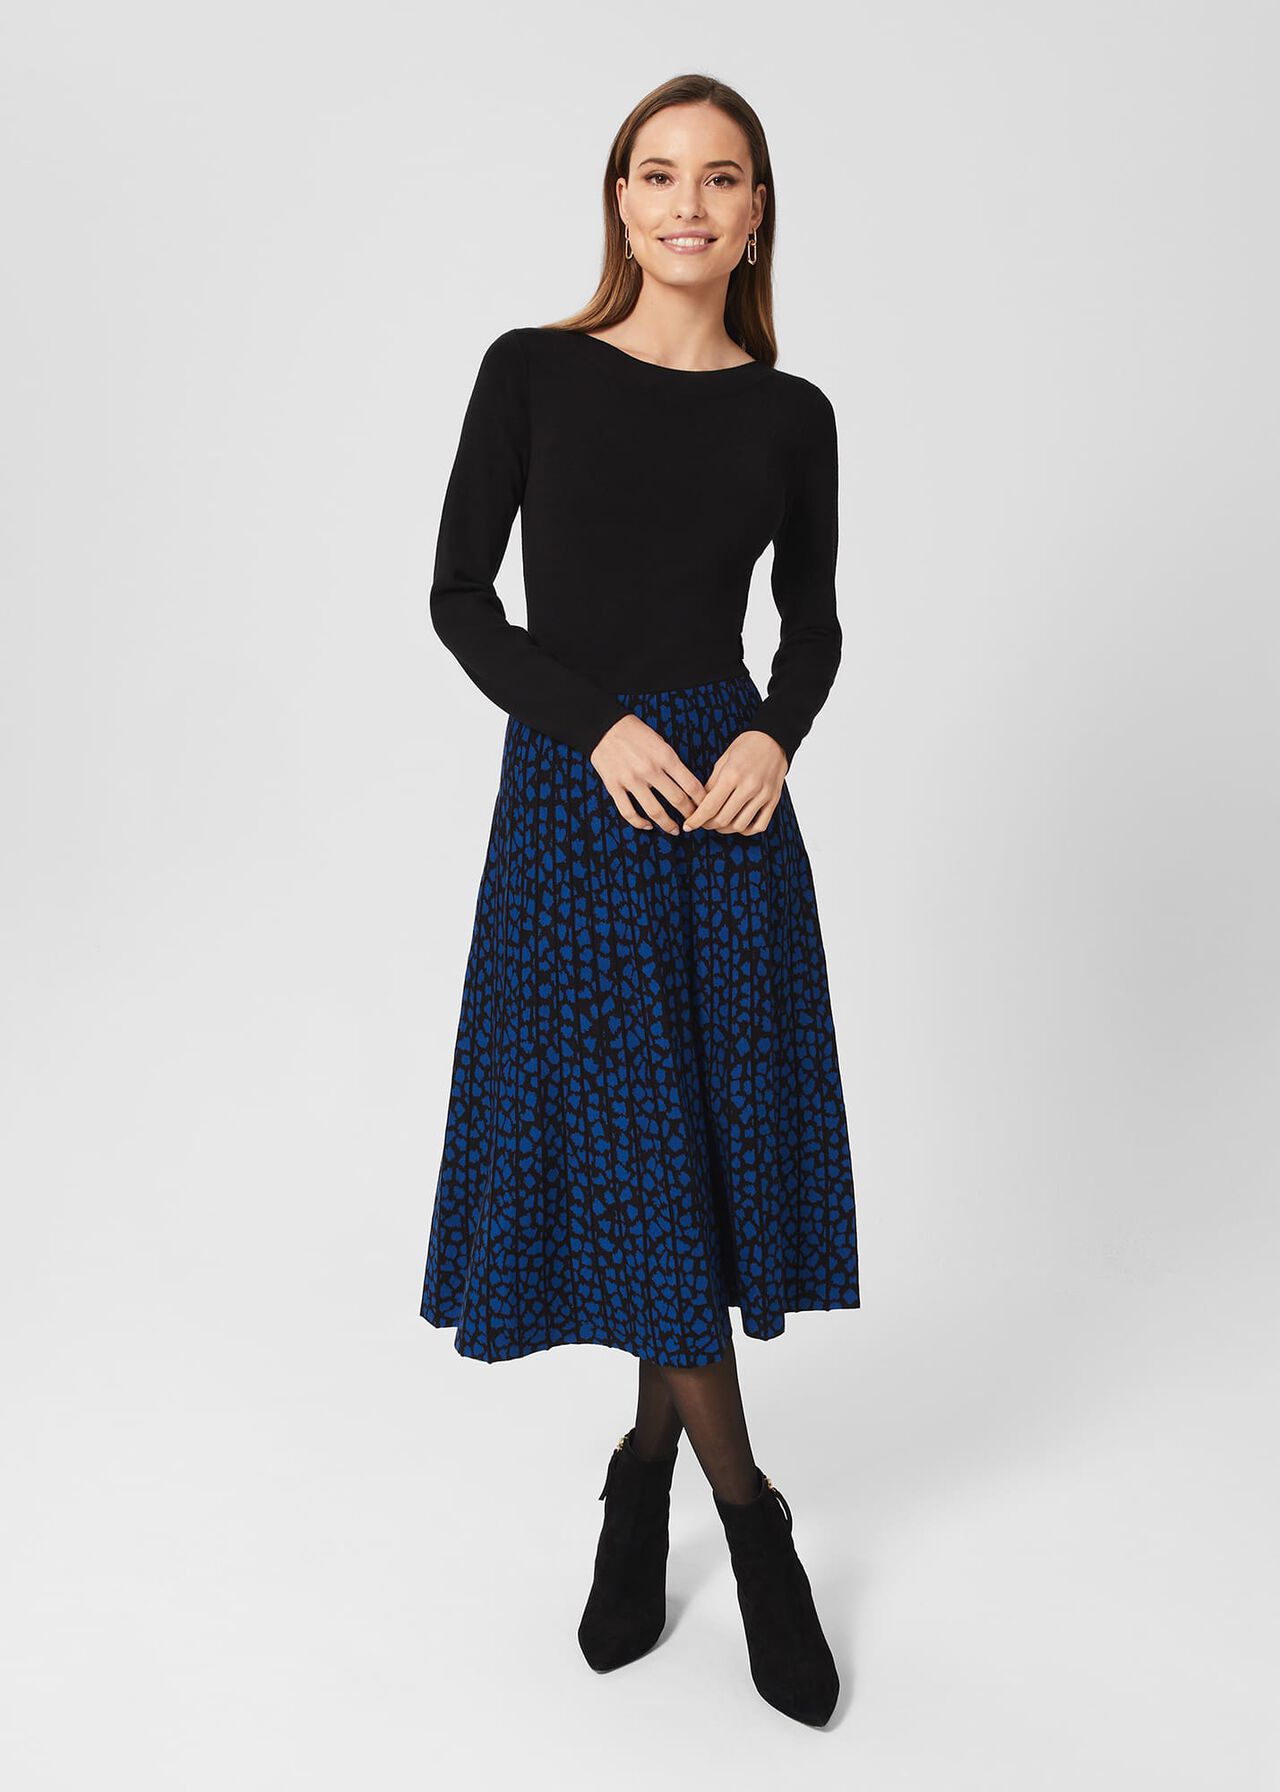 Petite Elena Knitted Dress, Black Blue, hi-res